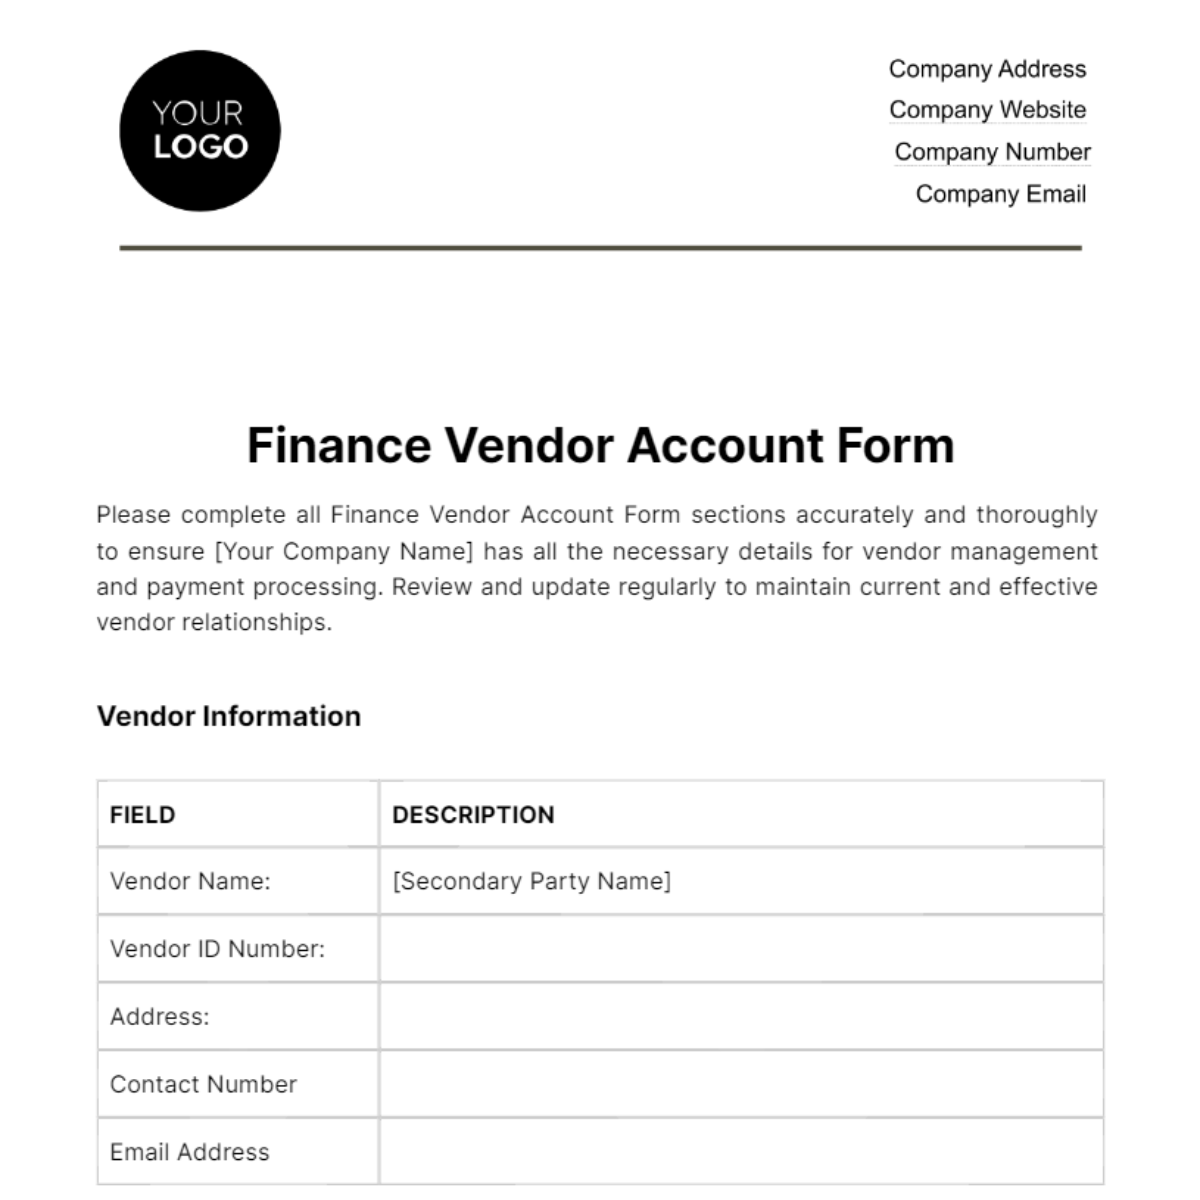 Finance Vendor Account Form Template